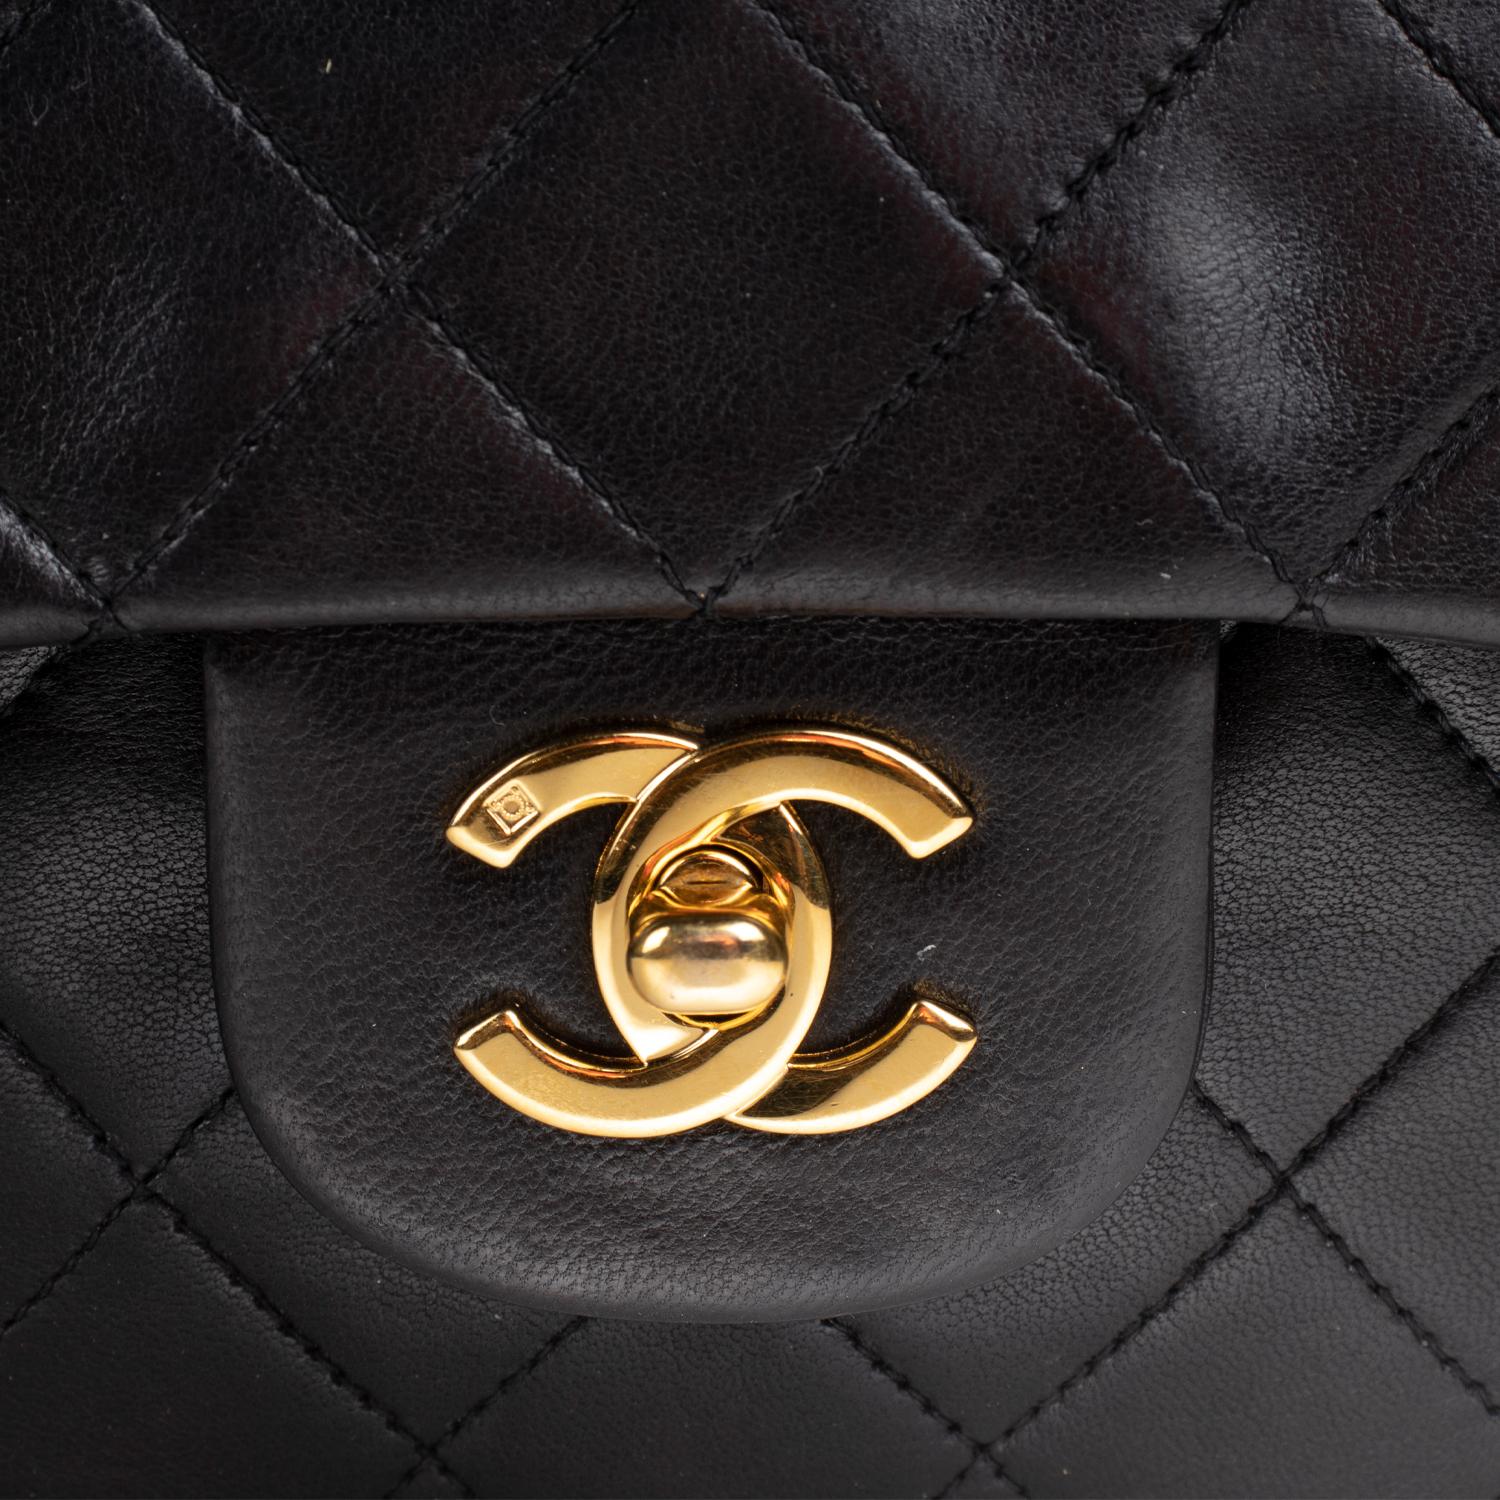 Chanel Medium Classic Double Flap Bag 2